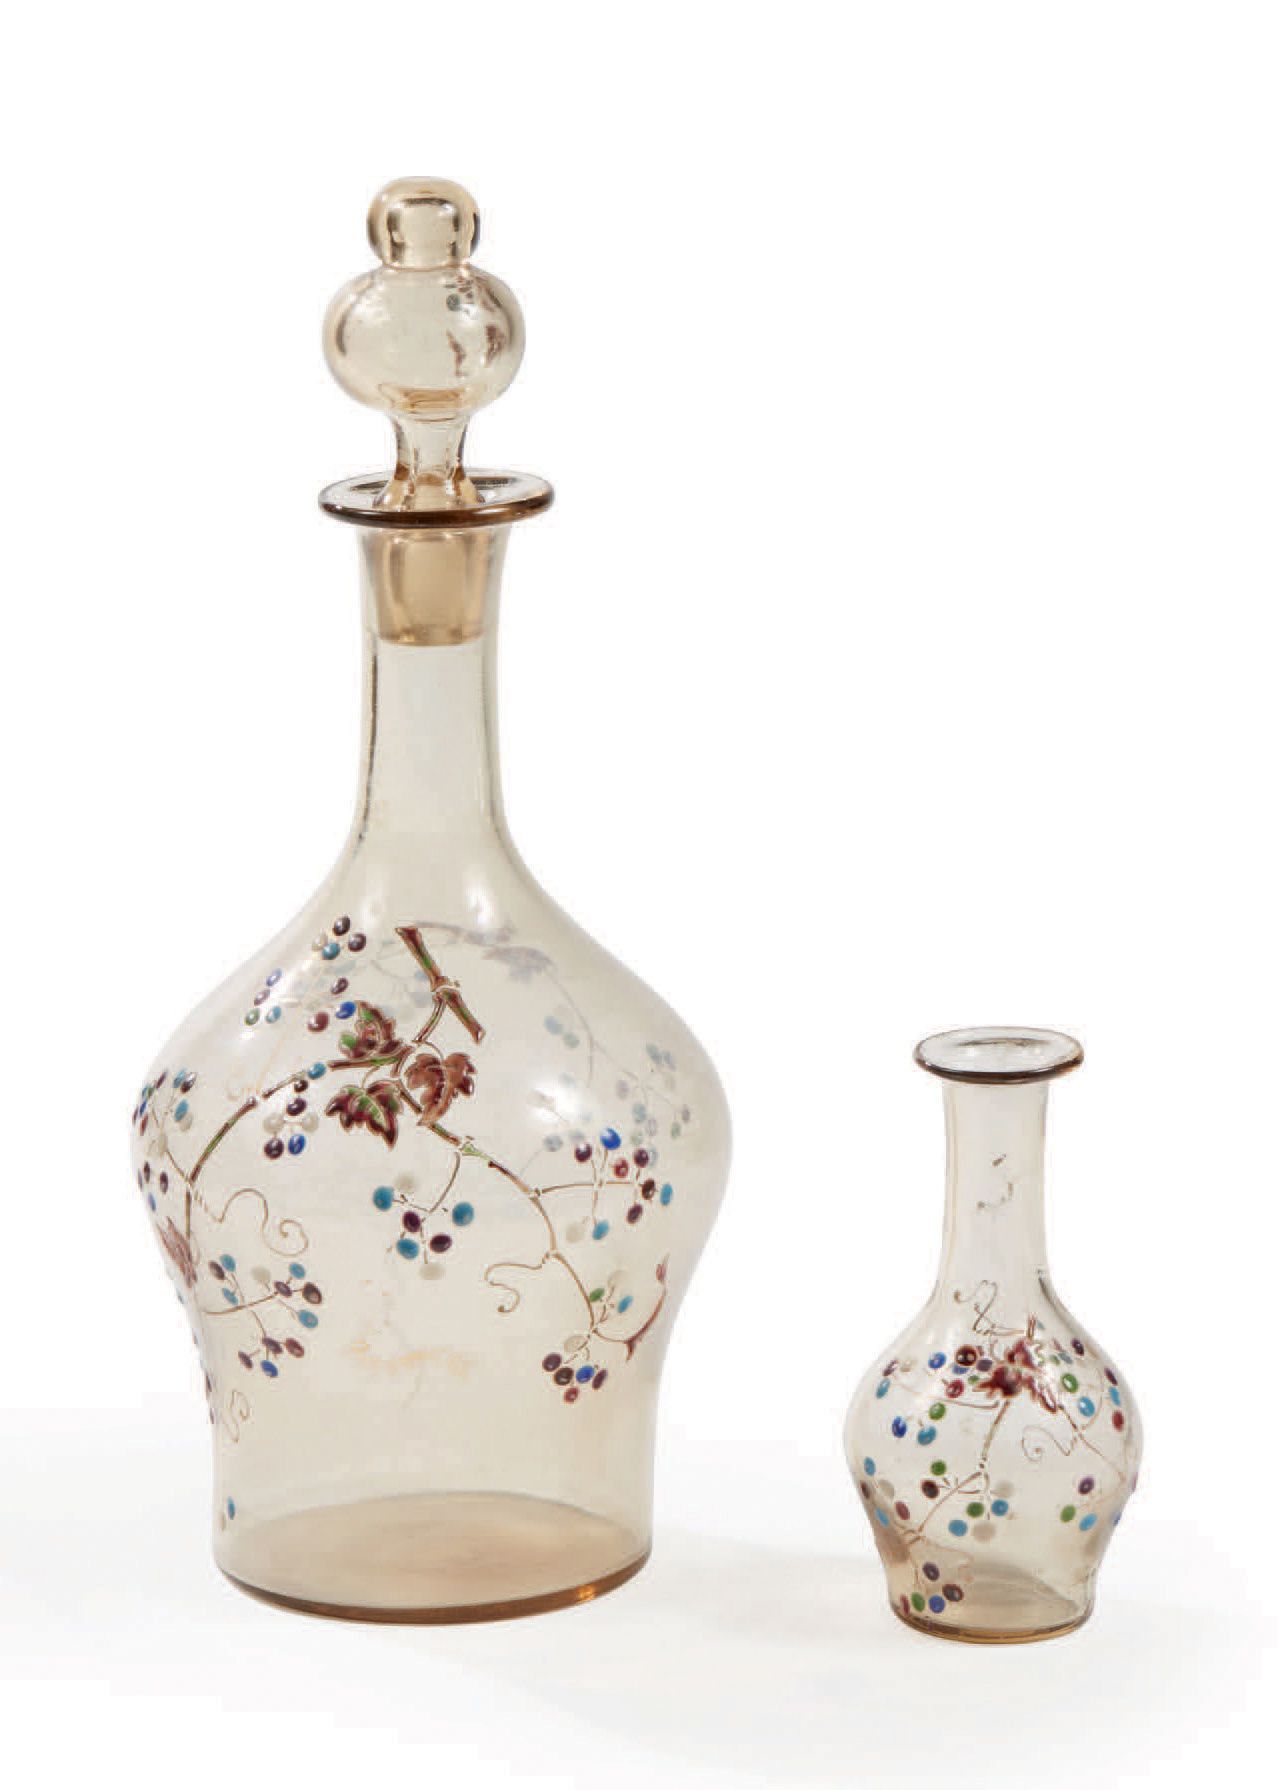 Émile GALLÉ (1846-1904) 
彩色玻璃杯和小花瓶，多色珐琅彩装饰的花卉图案
签名 "E Gallé Nancy"
高：28厘米（玻璃杯